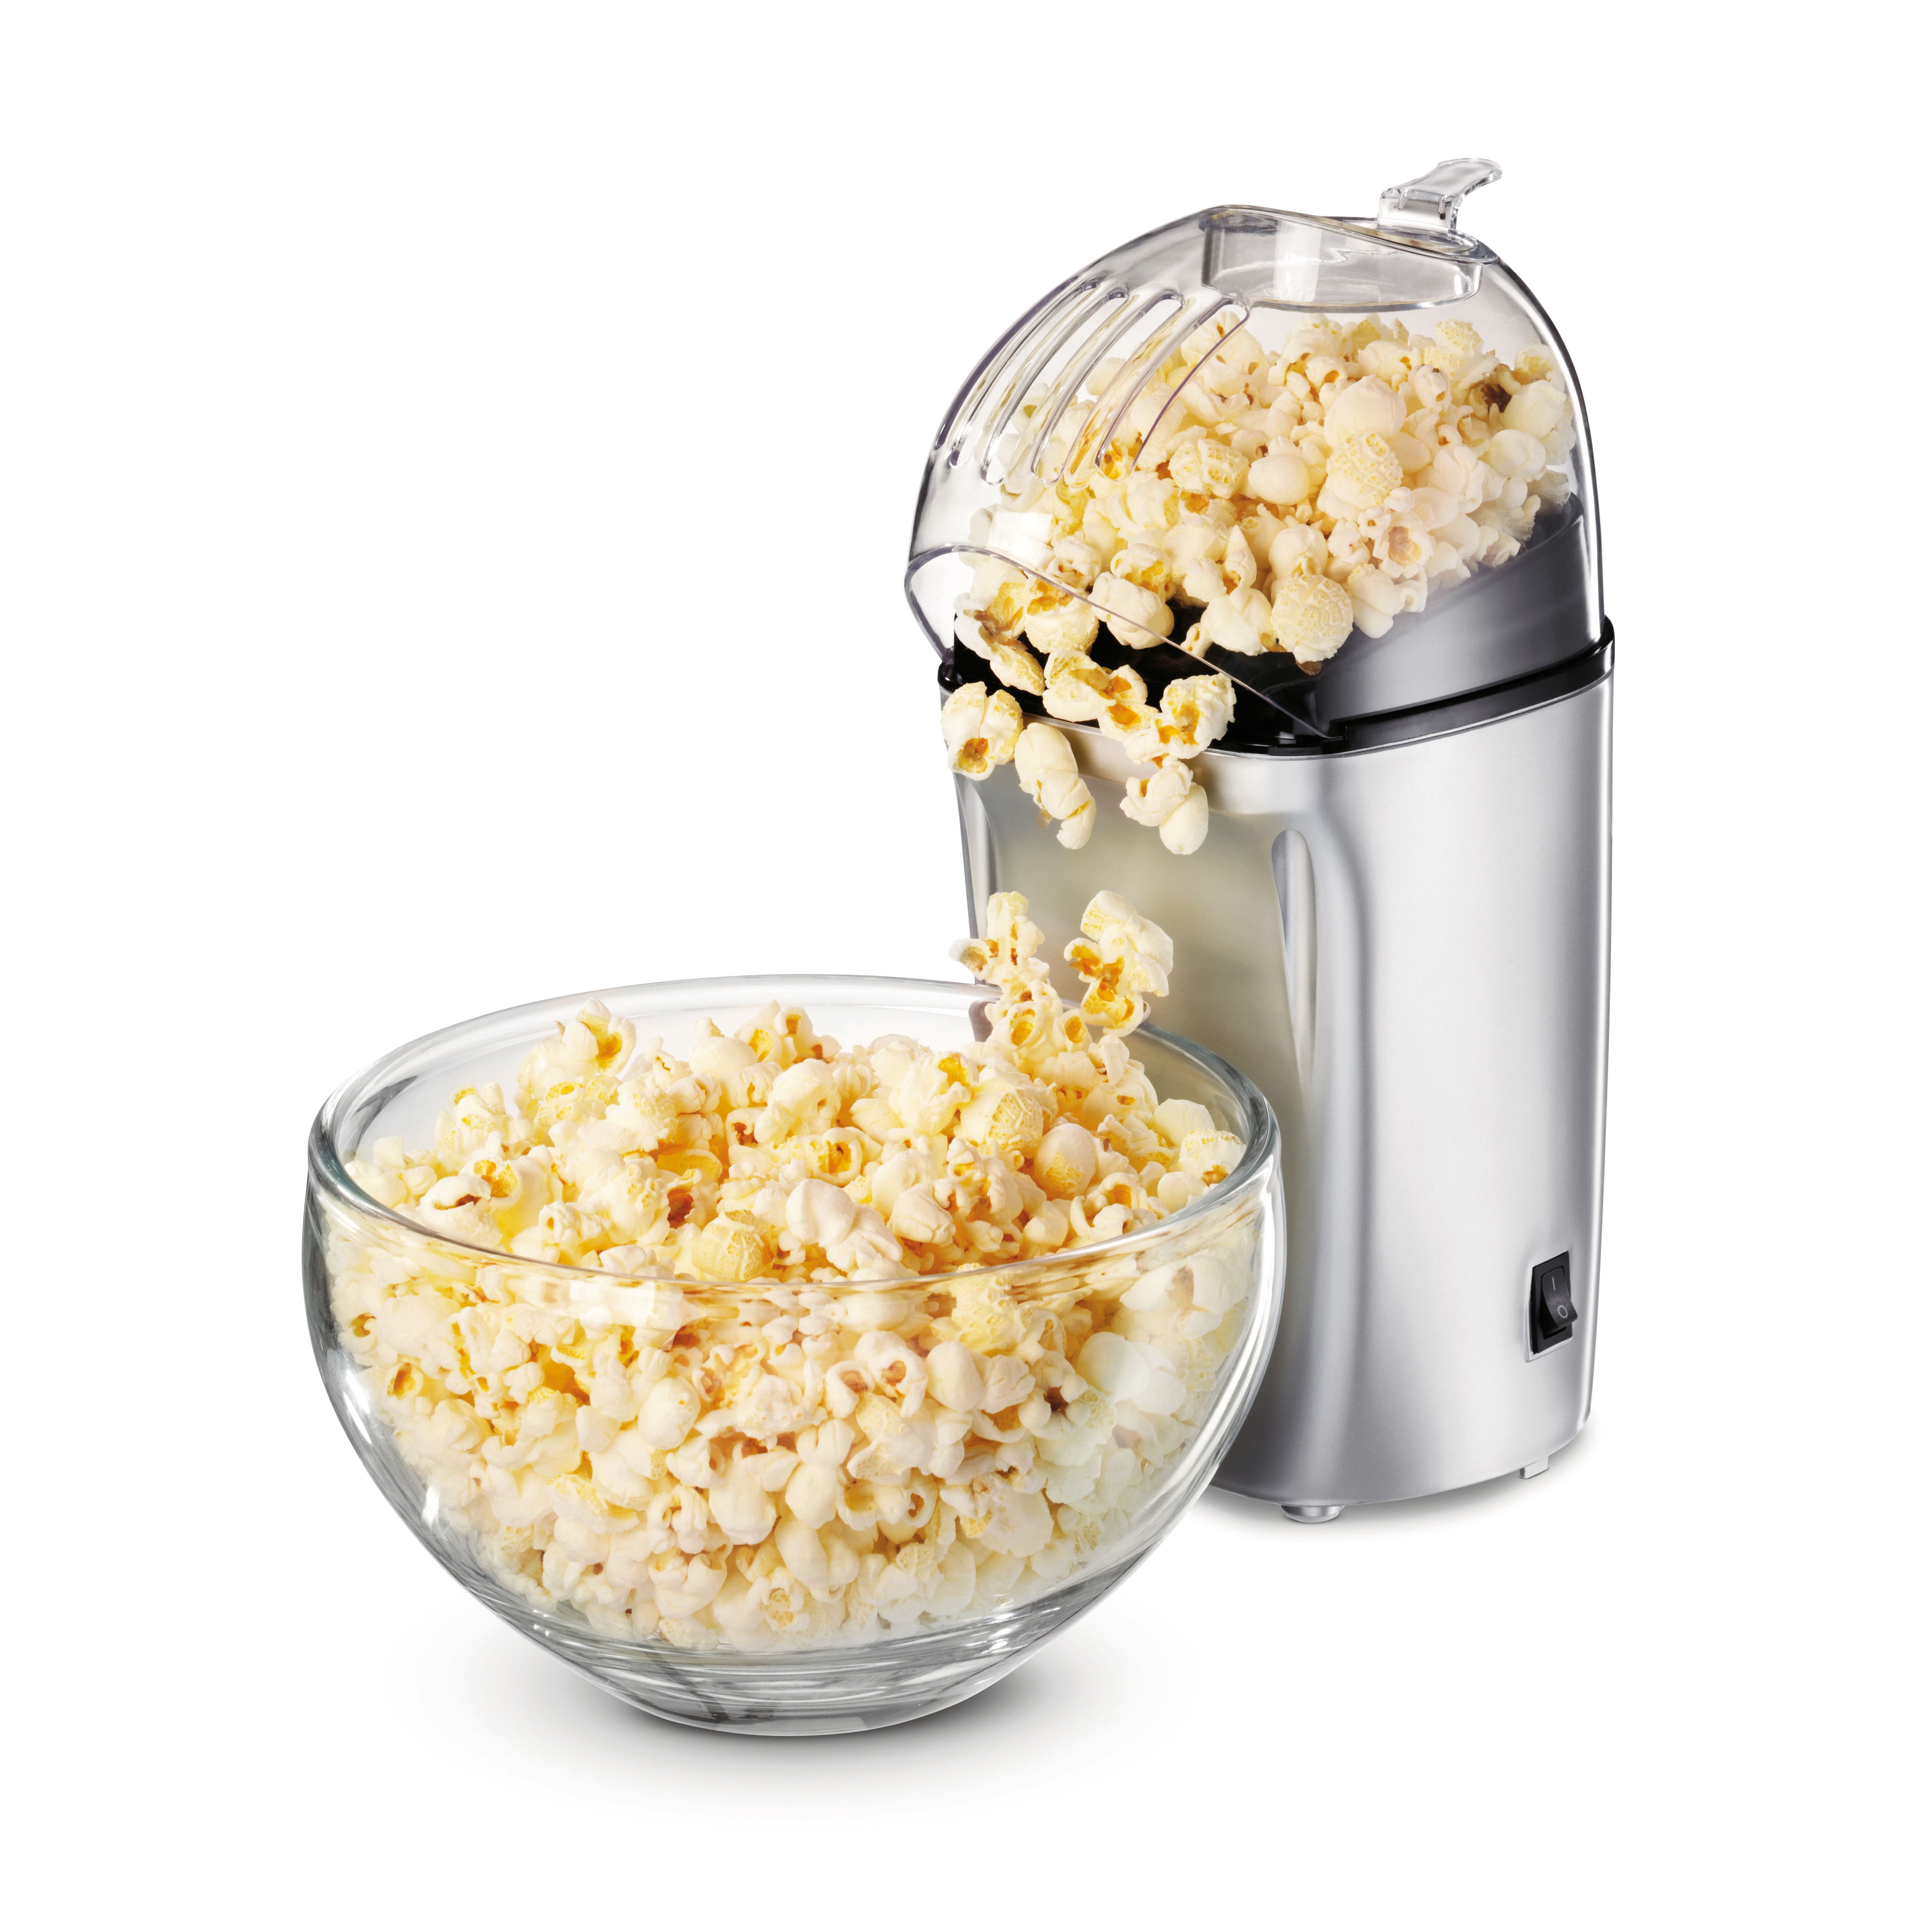 292985 - Princess 292985 Macchina per Popcorn - Macchine pop corn